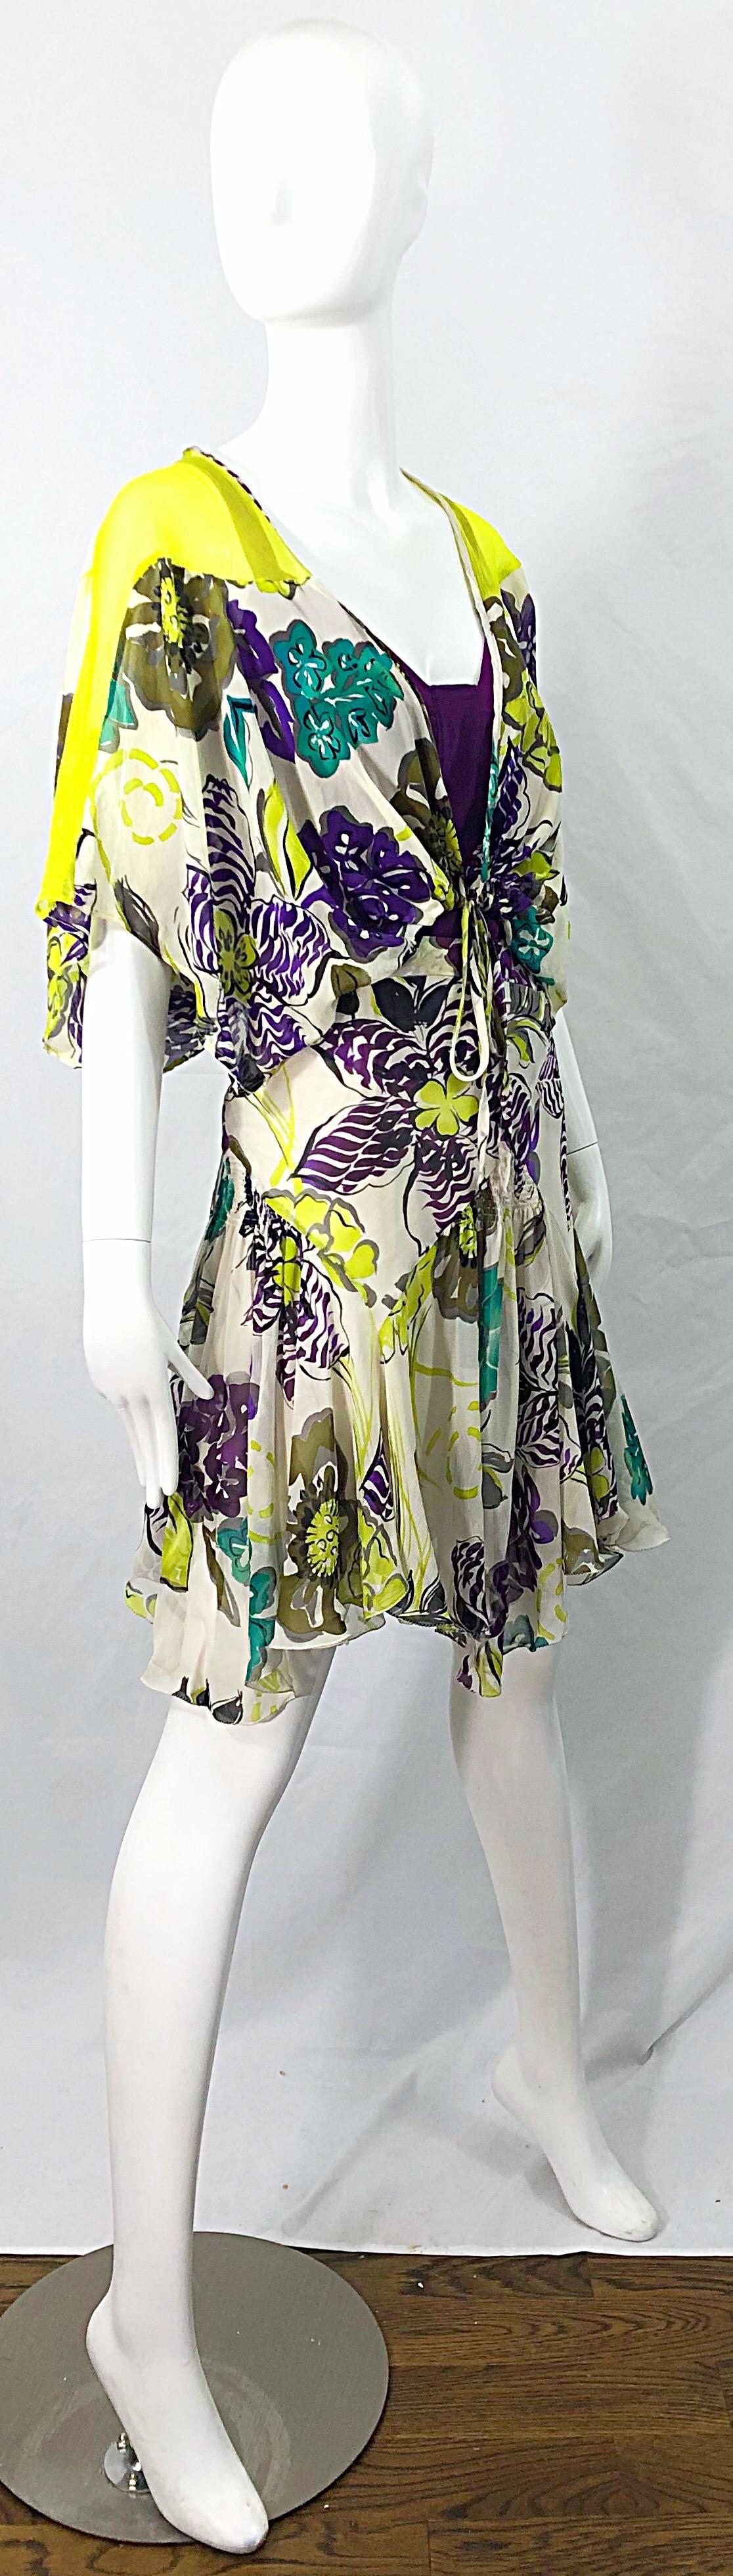 NWT Etro 2000s Size 44 US 8 - 10 Silk Chiffon Three Piece Skirt Top Bolero Dress For Sale 3